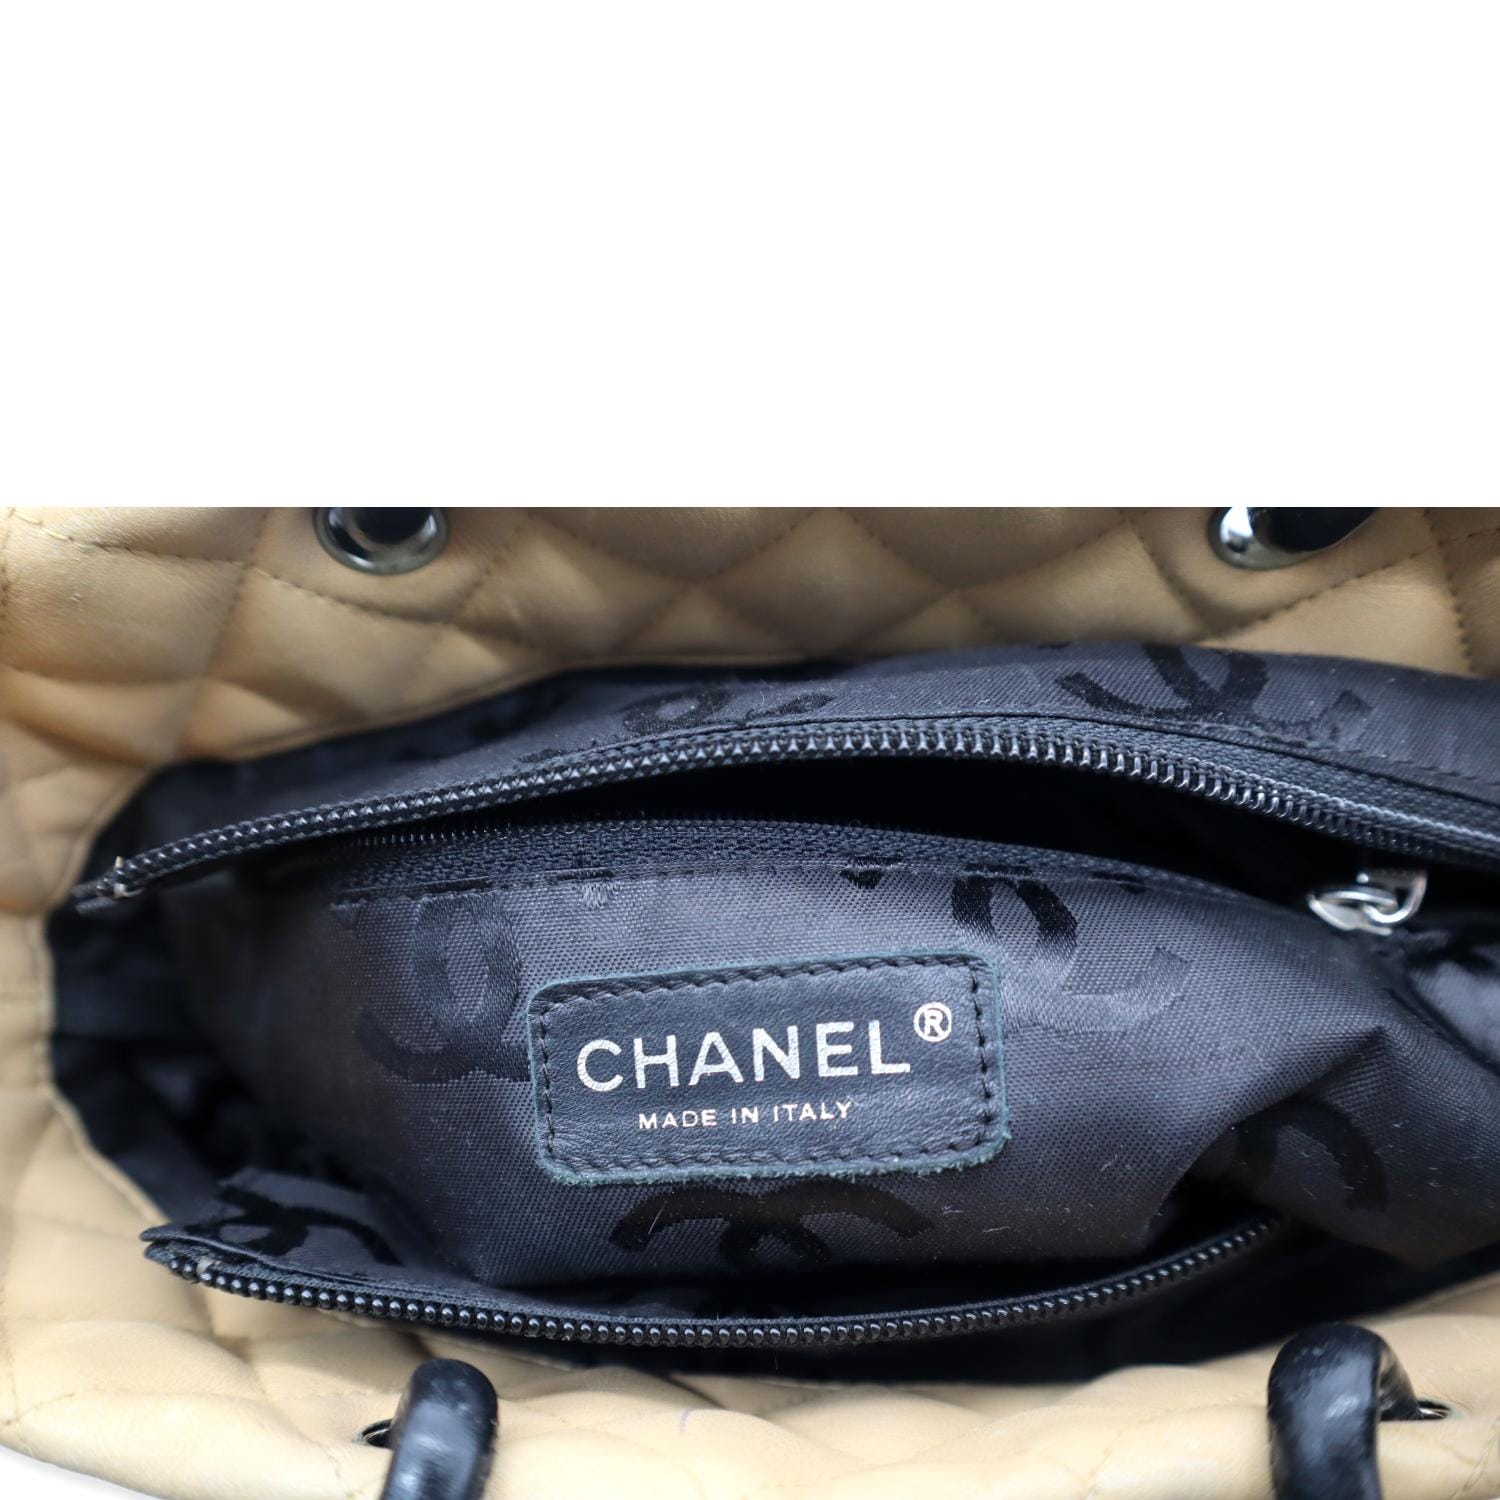 chanel black and white tote purse